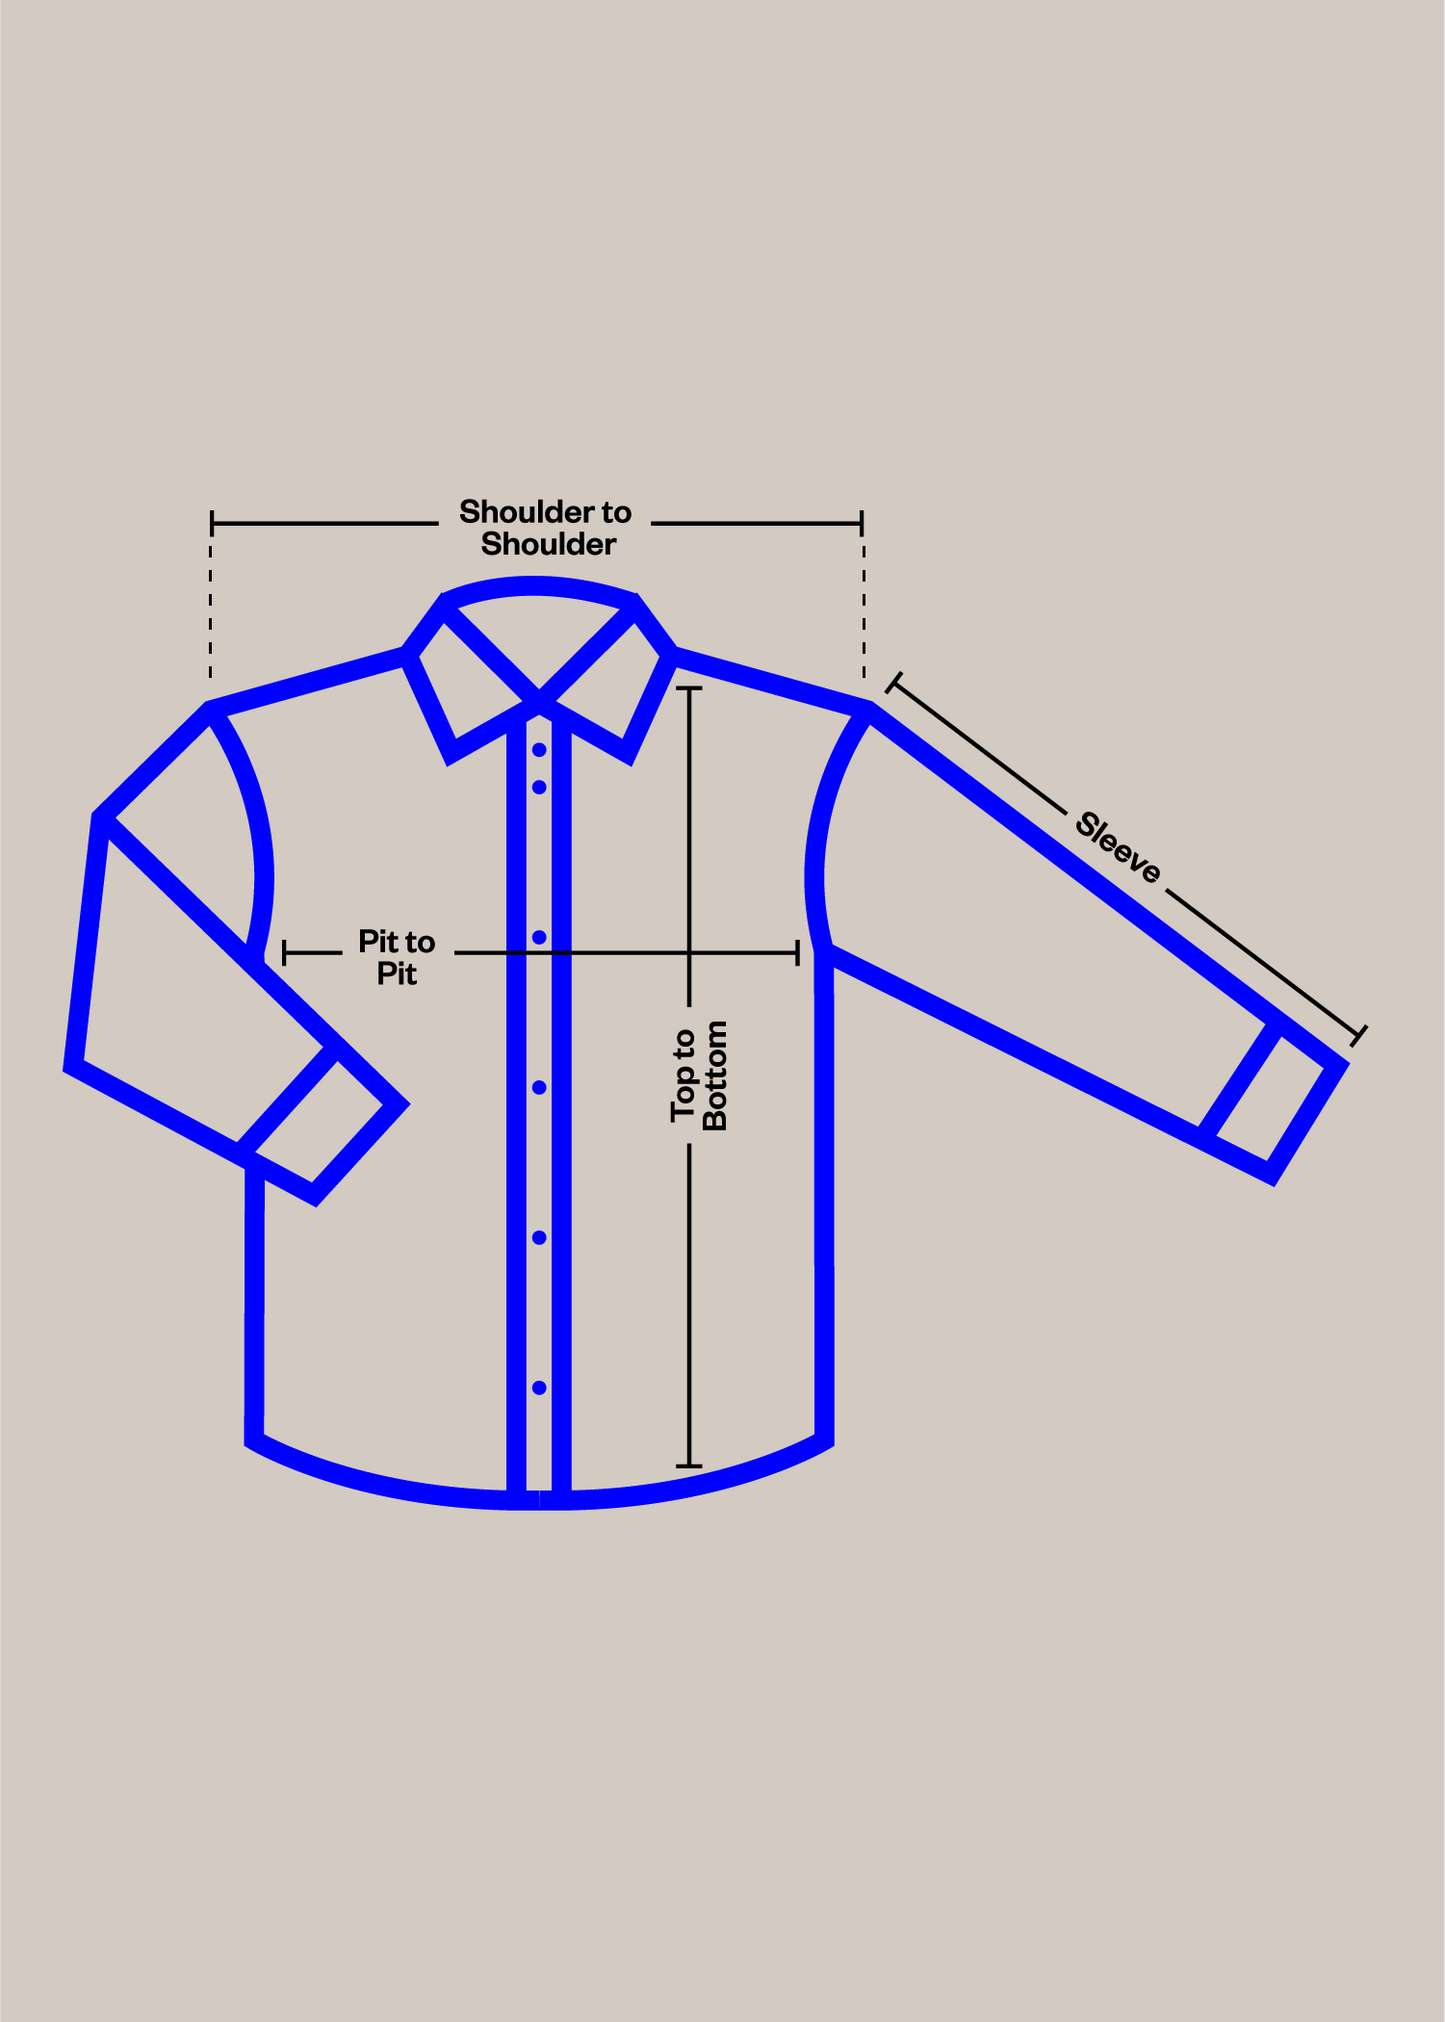 Vintage 1980s Bleu de Travail Workwear Chore Jacket Size L/XL